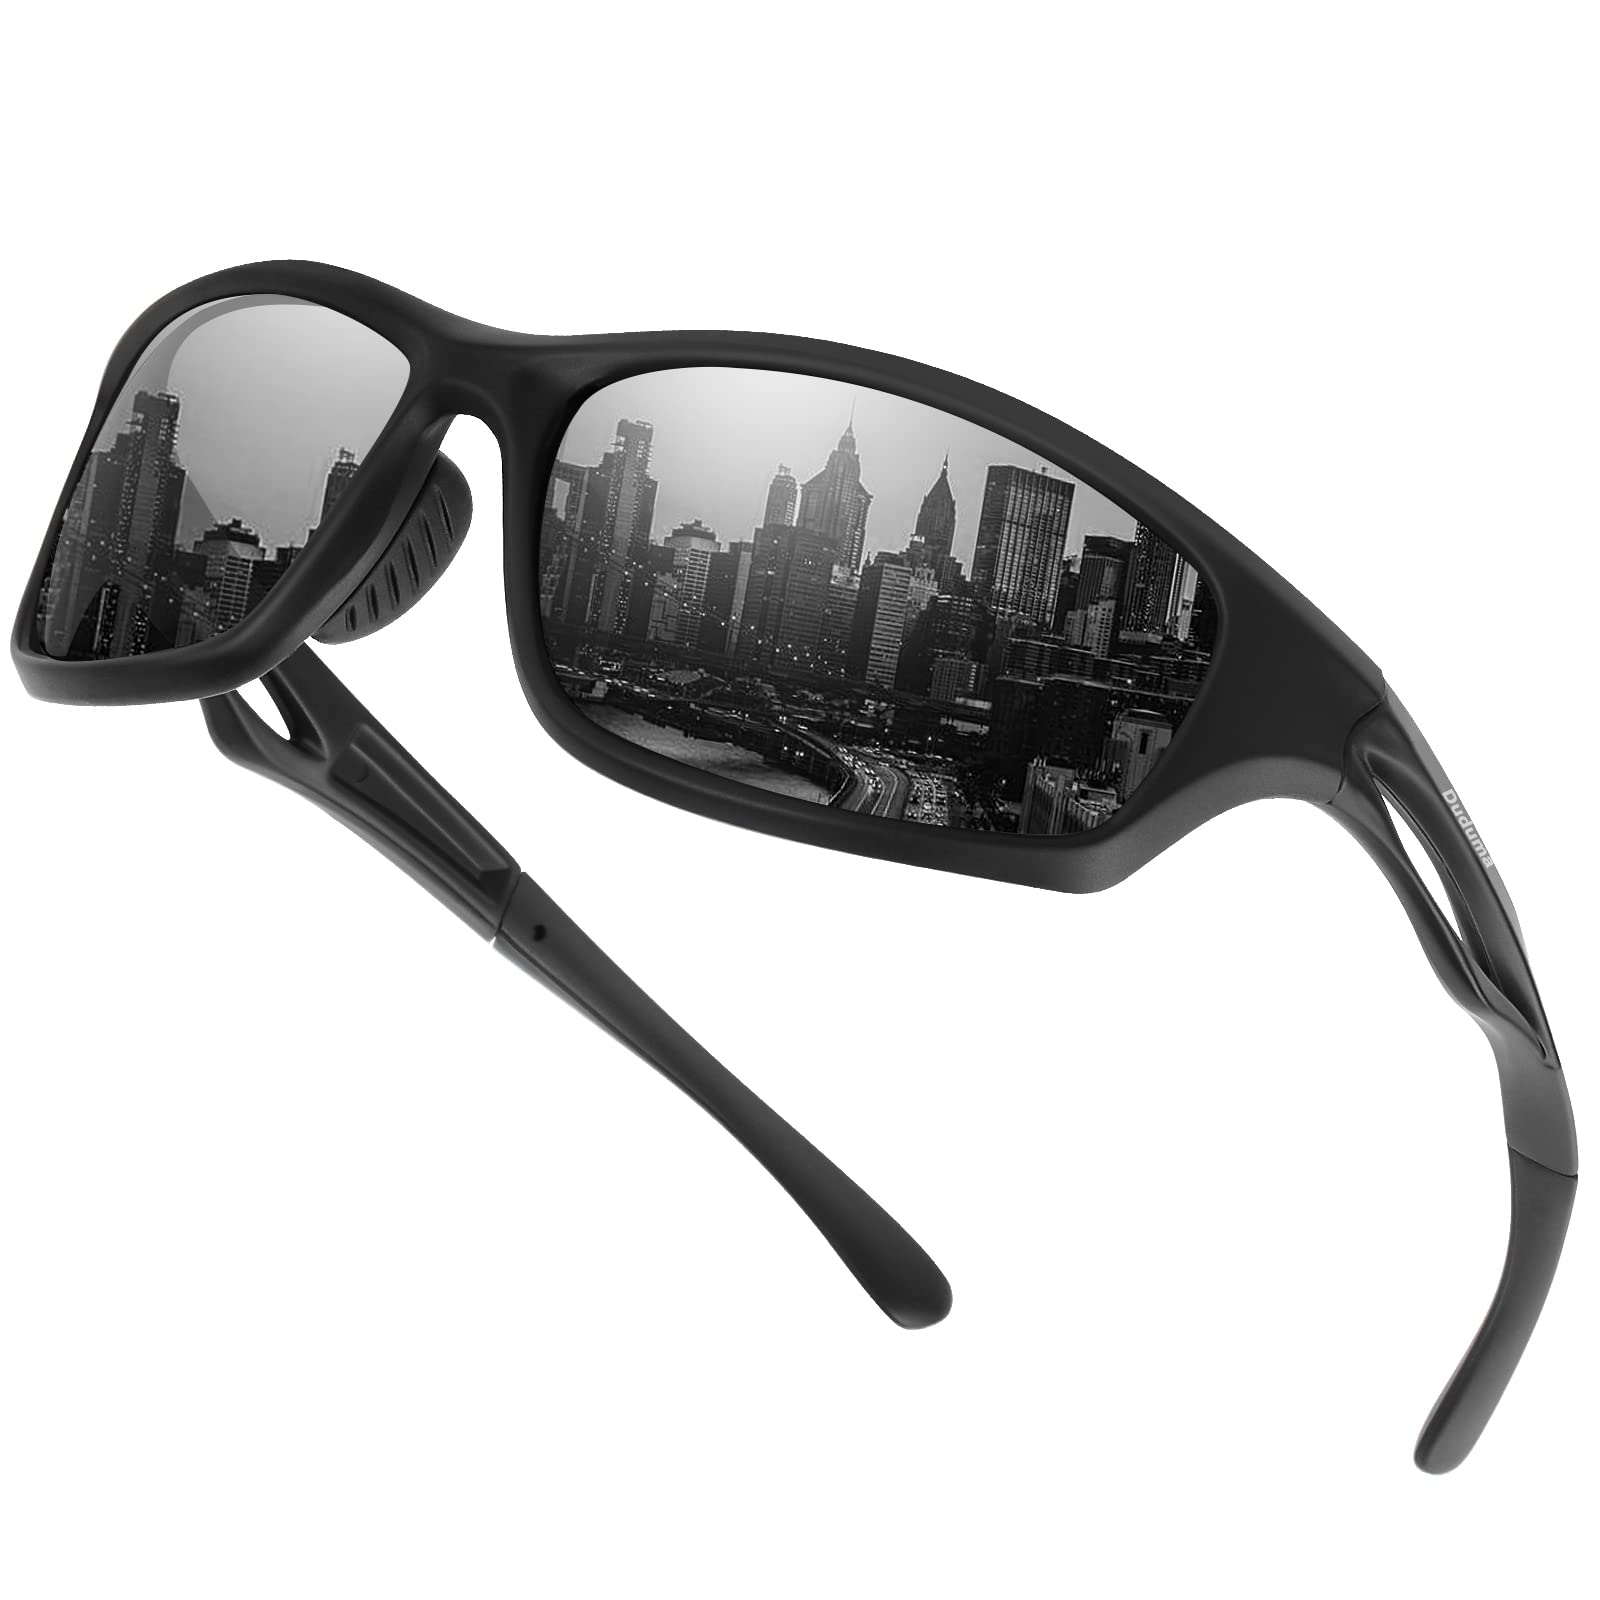 Polarized Sports Sunglasses for Men Women Cycling Running Driving Fishing  Golf Baseball Glasses EMS-TR90 Frame - C11809M64WU